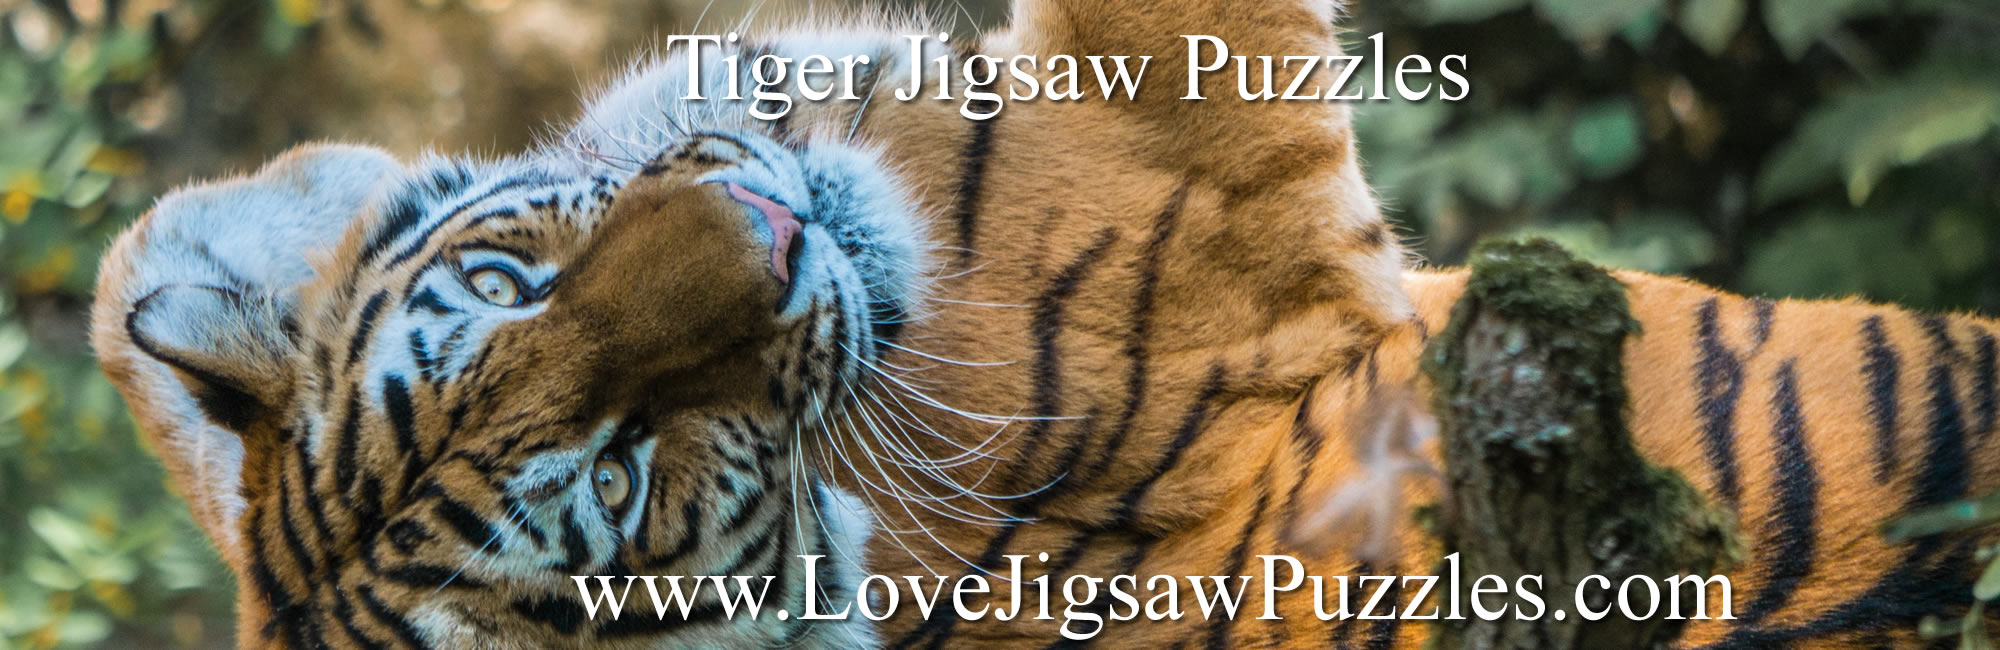 Tiger jigsaw